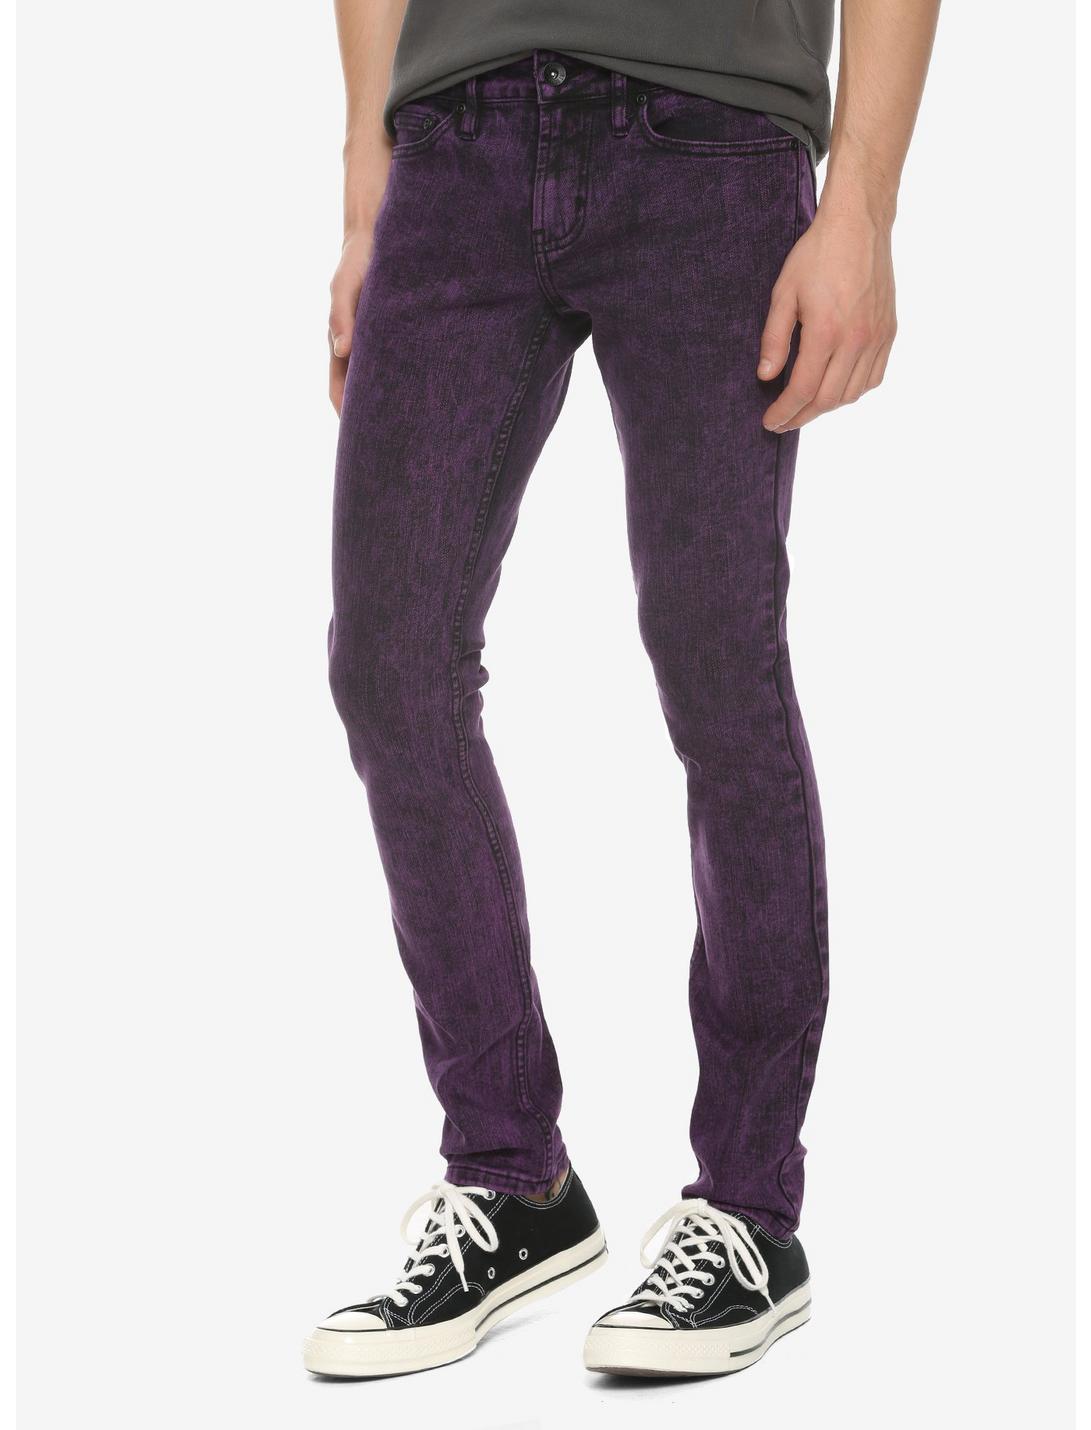 HT Denim Purple Acid Wash Skinny Jeans, PURPLE, hi-res